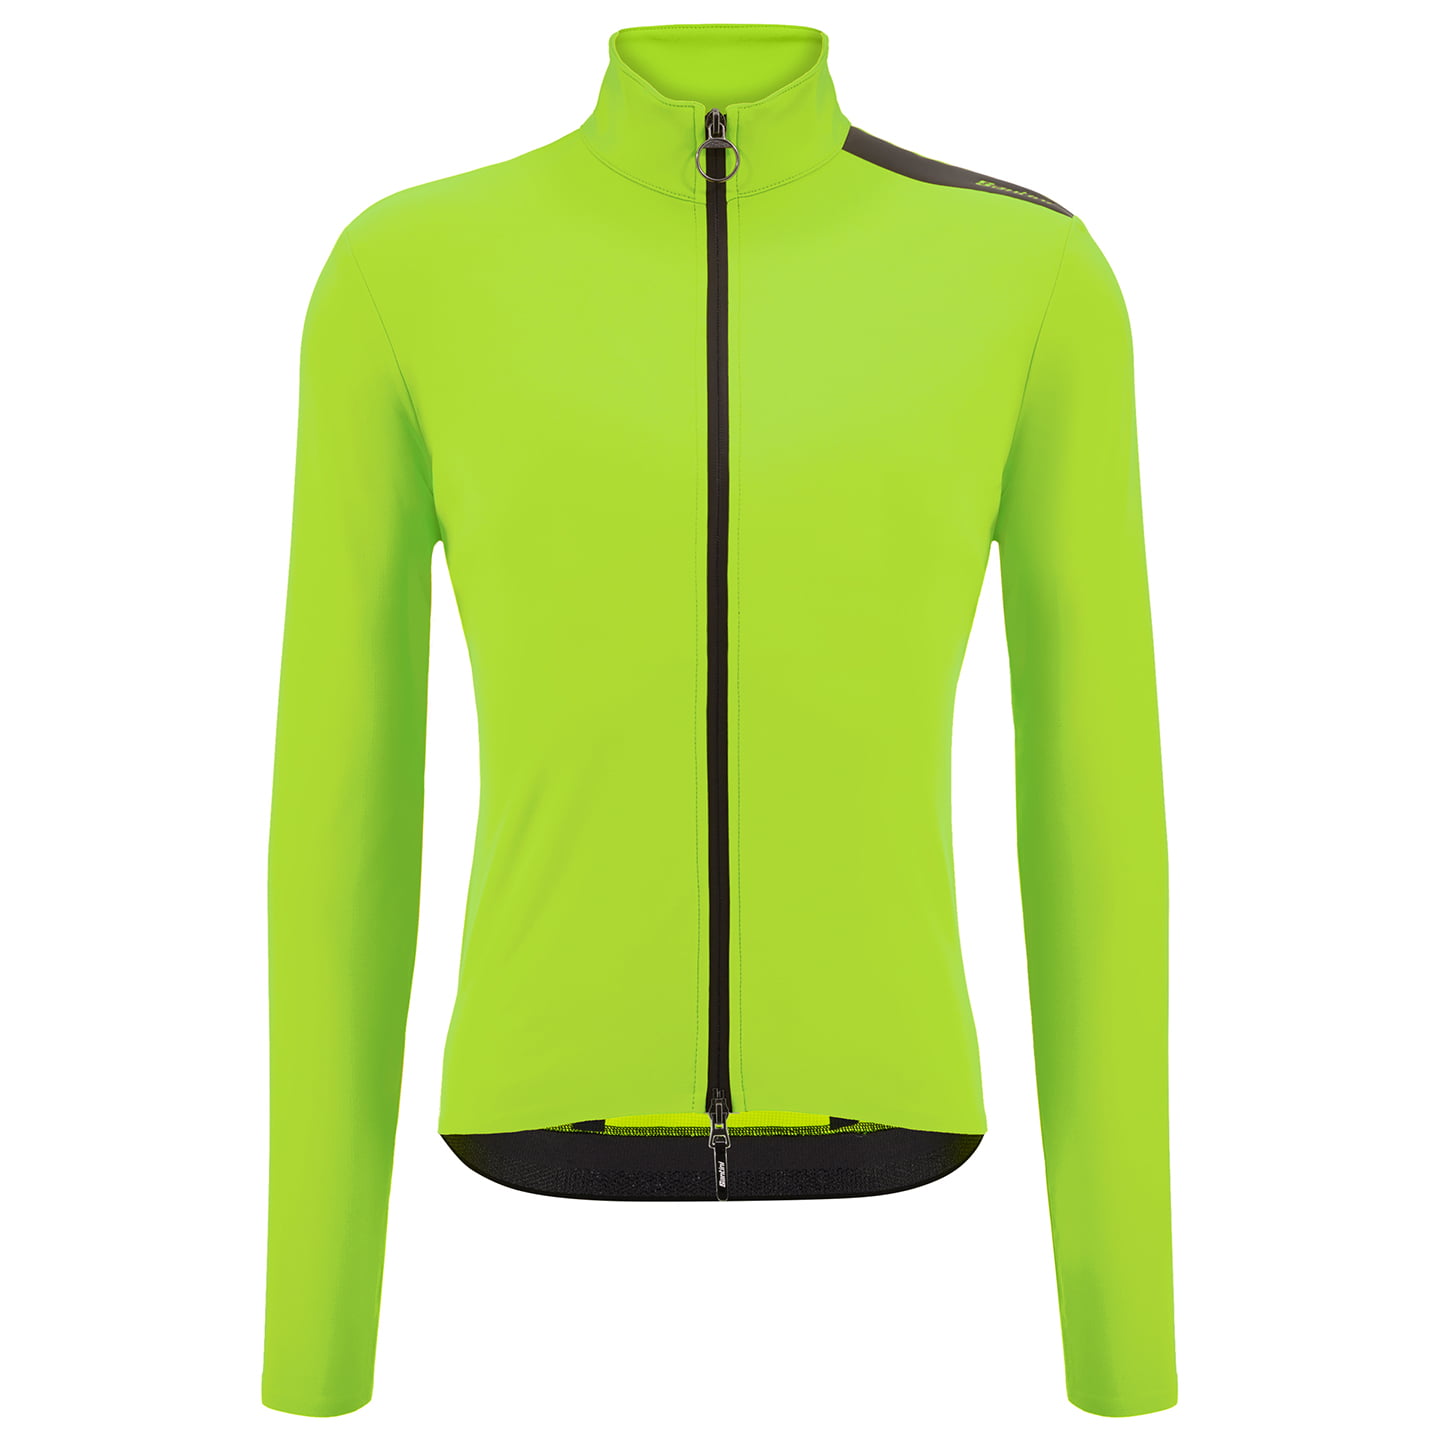 SANTINI Winter Jacket Adapt Multi Thermal Jacket, for men, size M, Cycle jacket, Cycling clothing